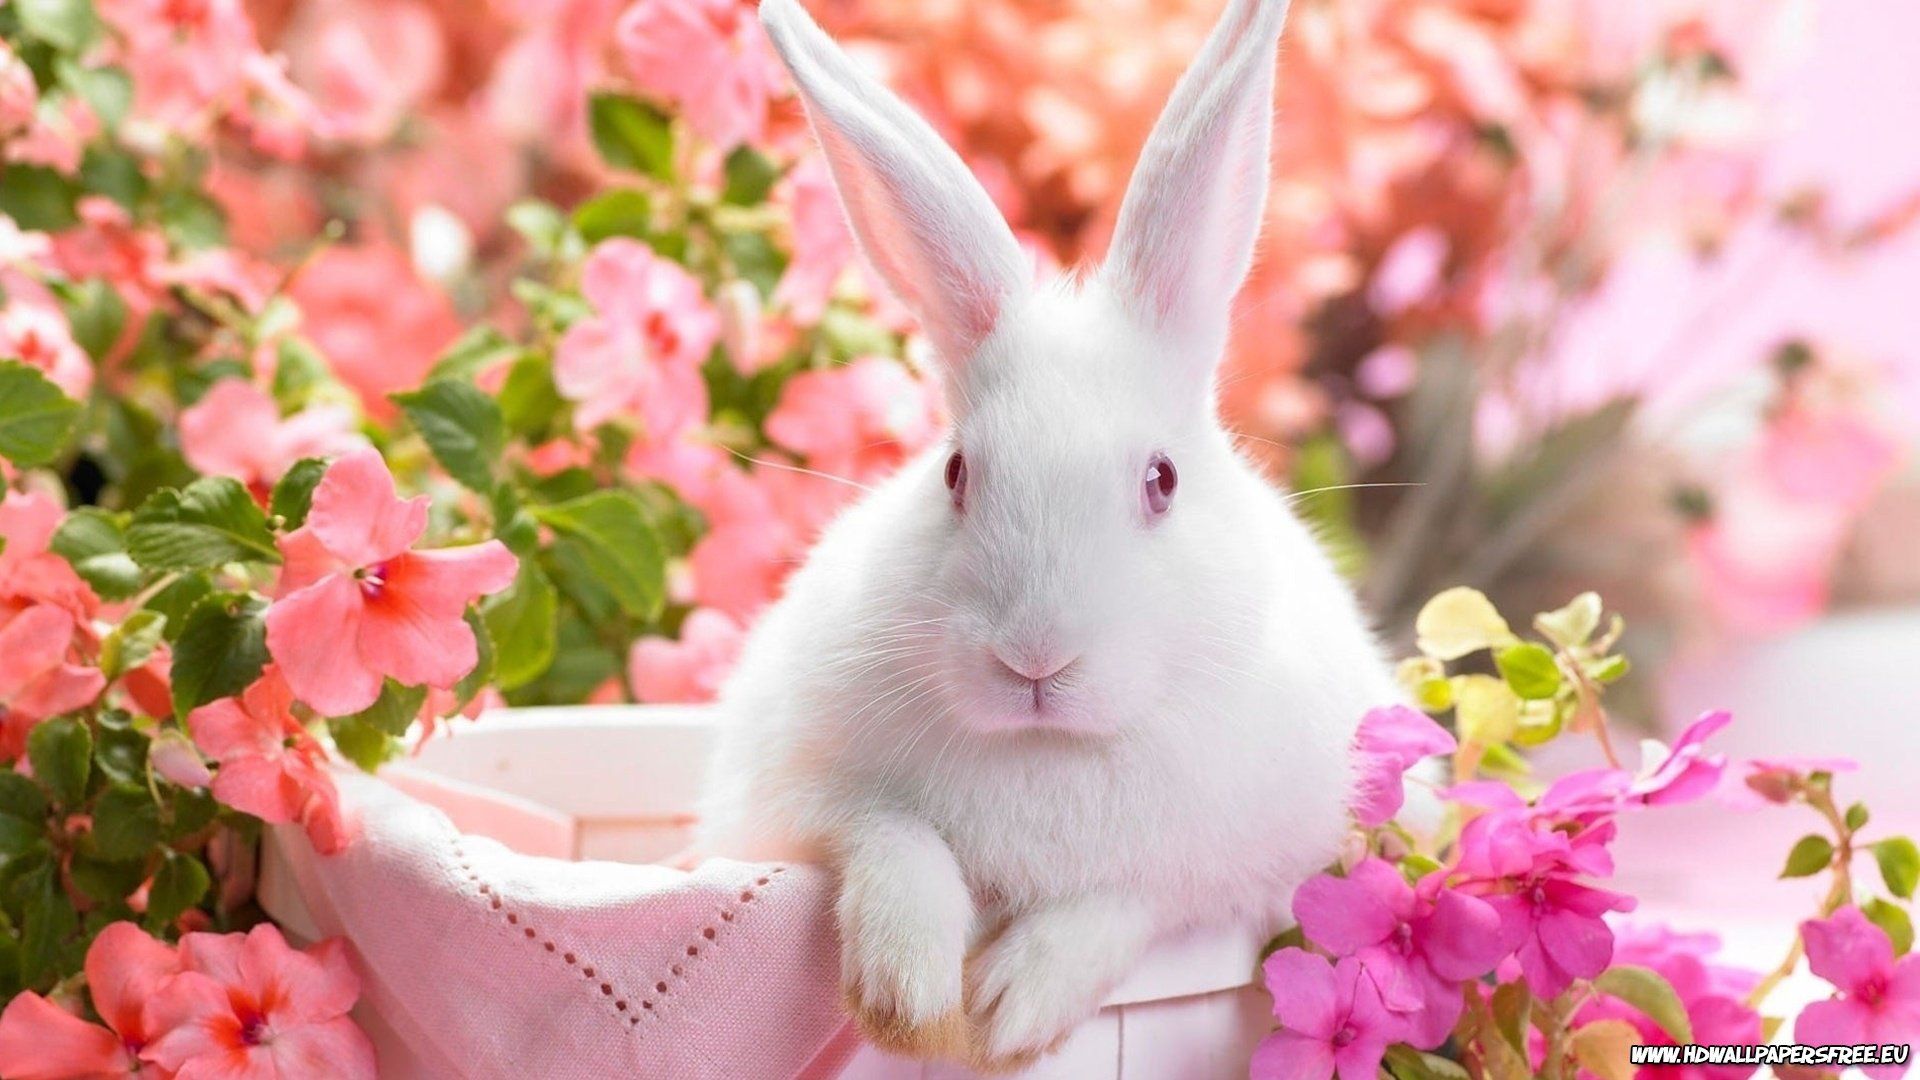 Adorable Easter Bunny